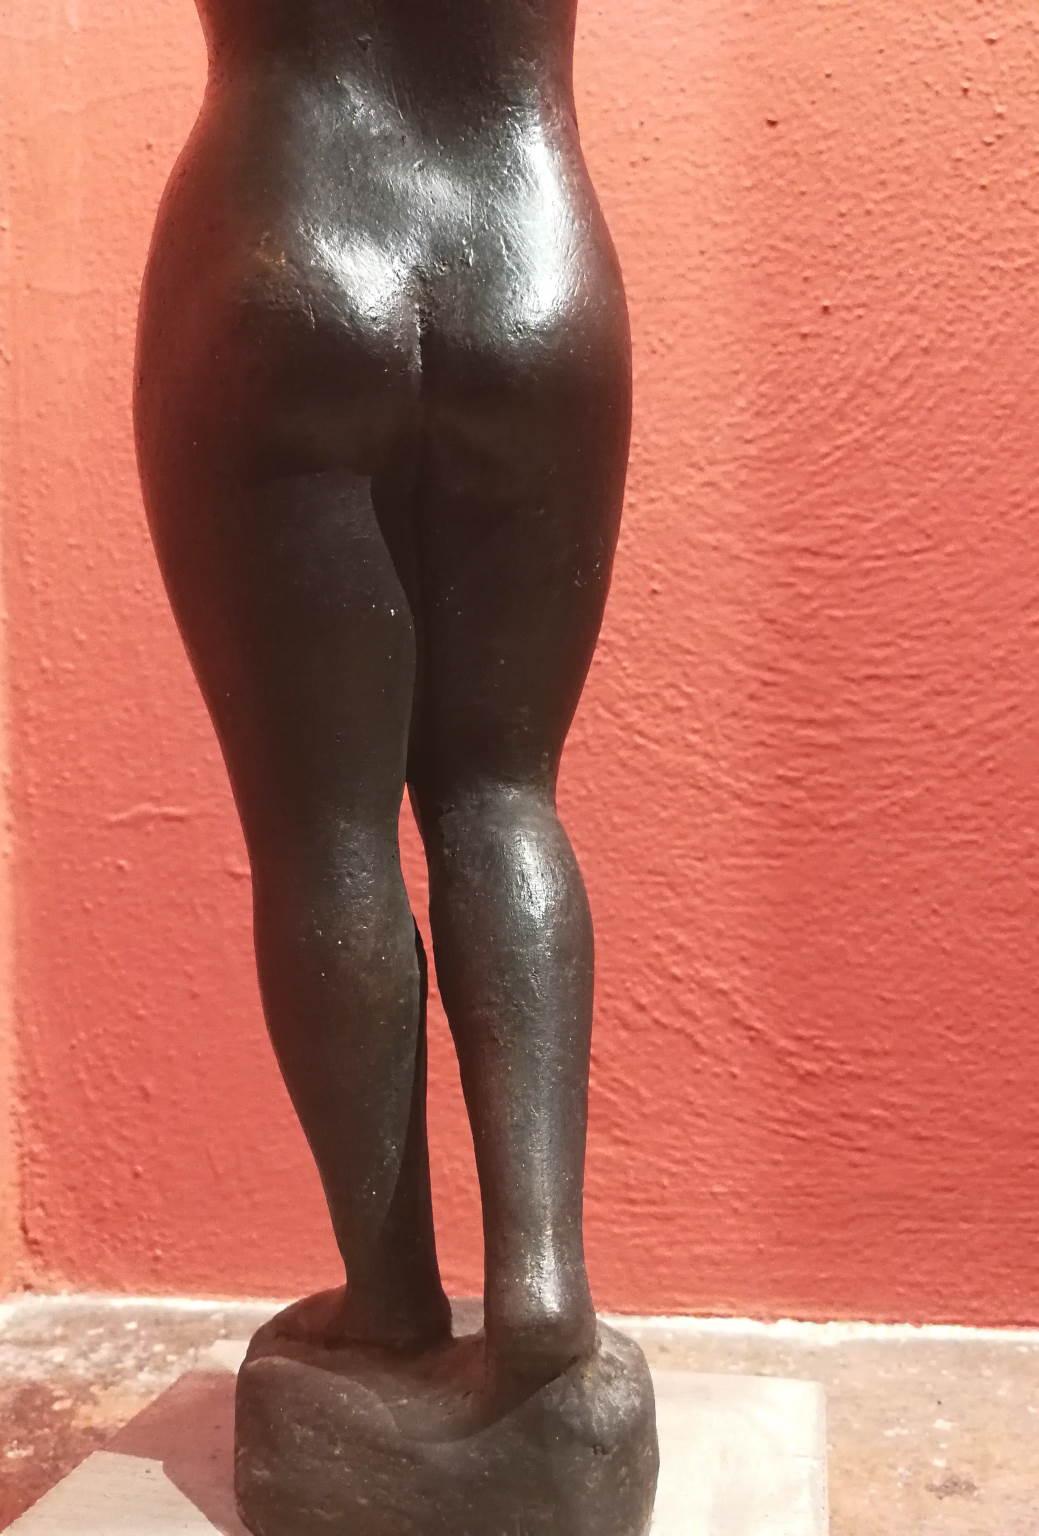 Quinto Martini Female Nude Sculpture 20 century bronze For Sale 7